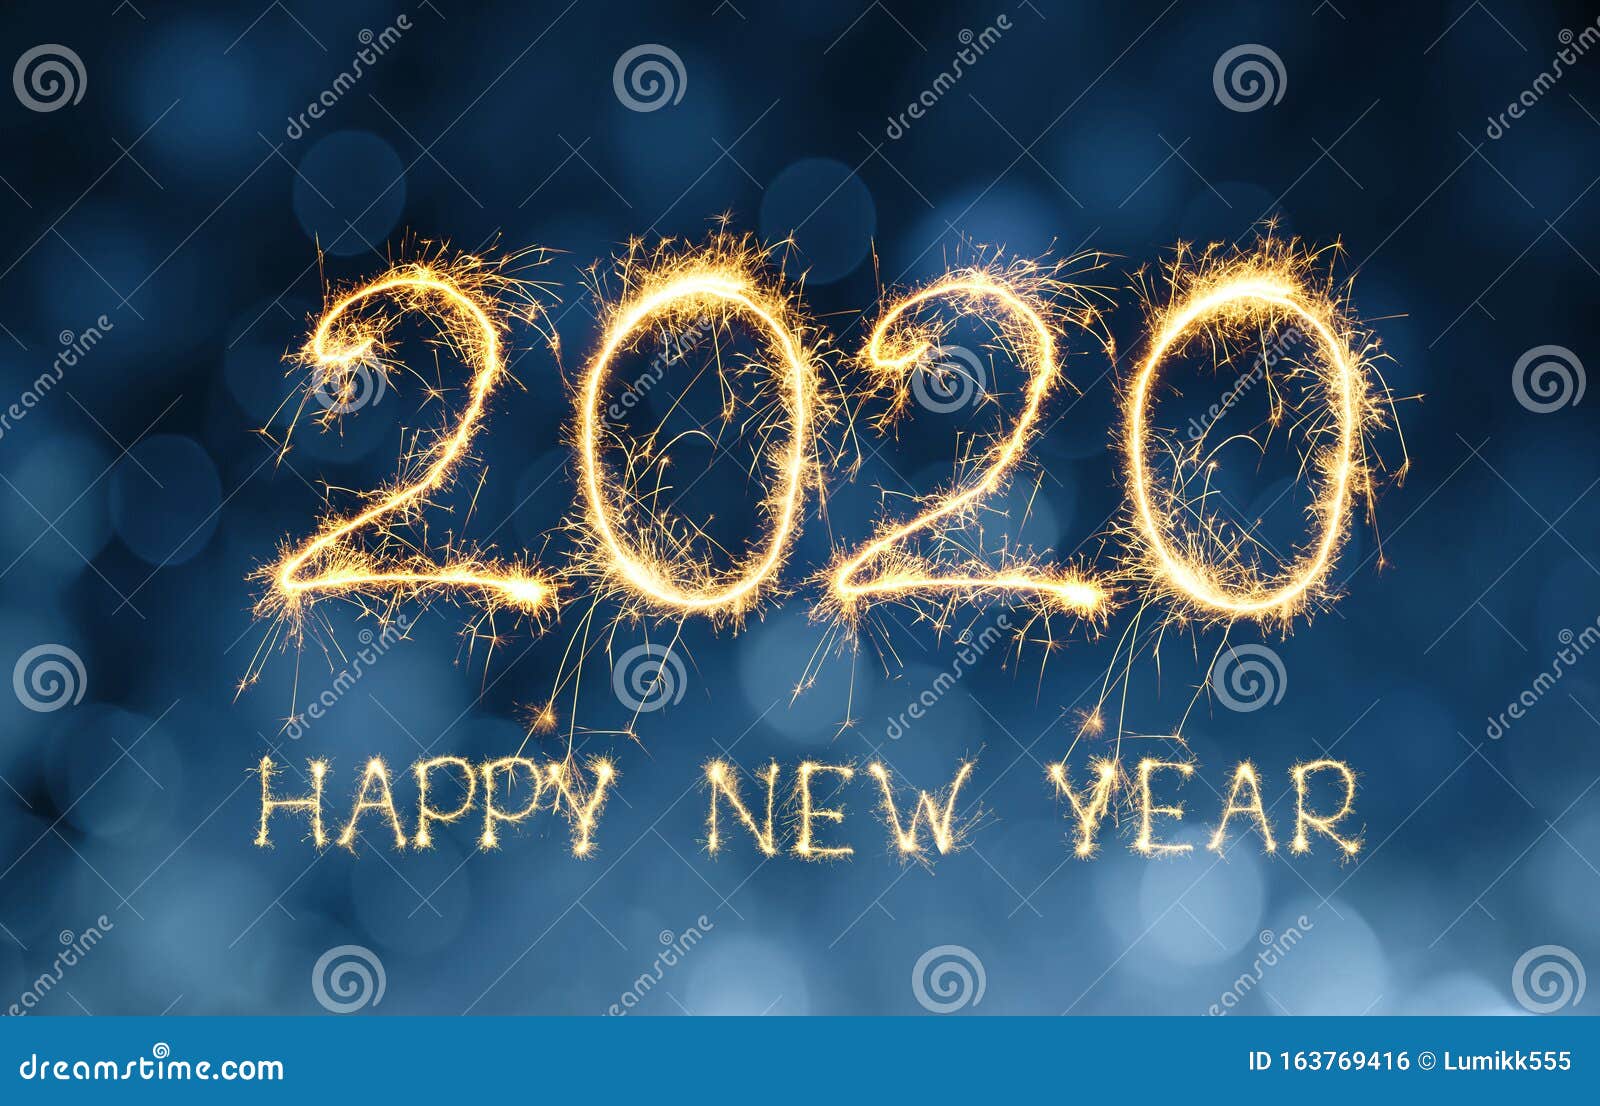 Beautiful Holiday Greeting Card Happy New Year 2020 Stock Photo ...